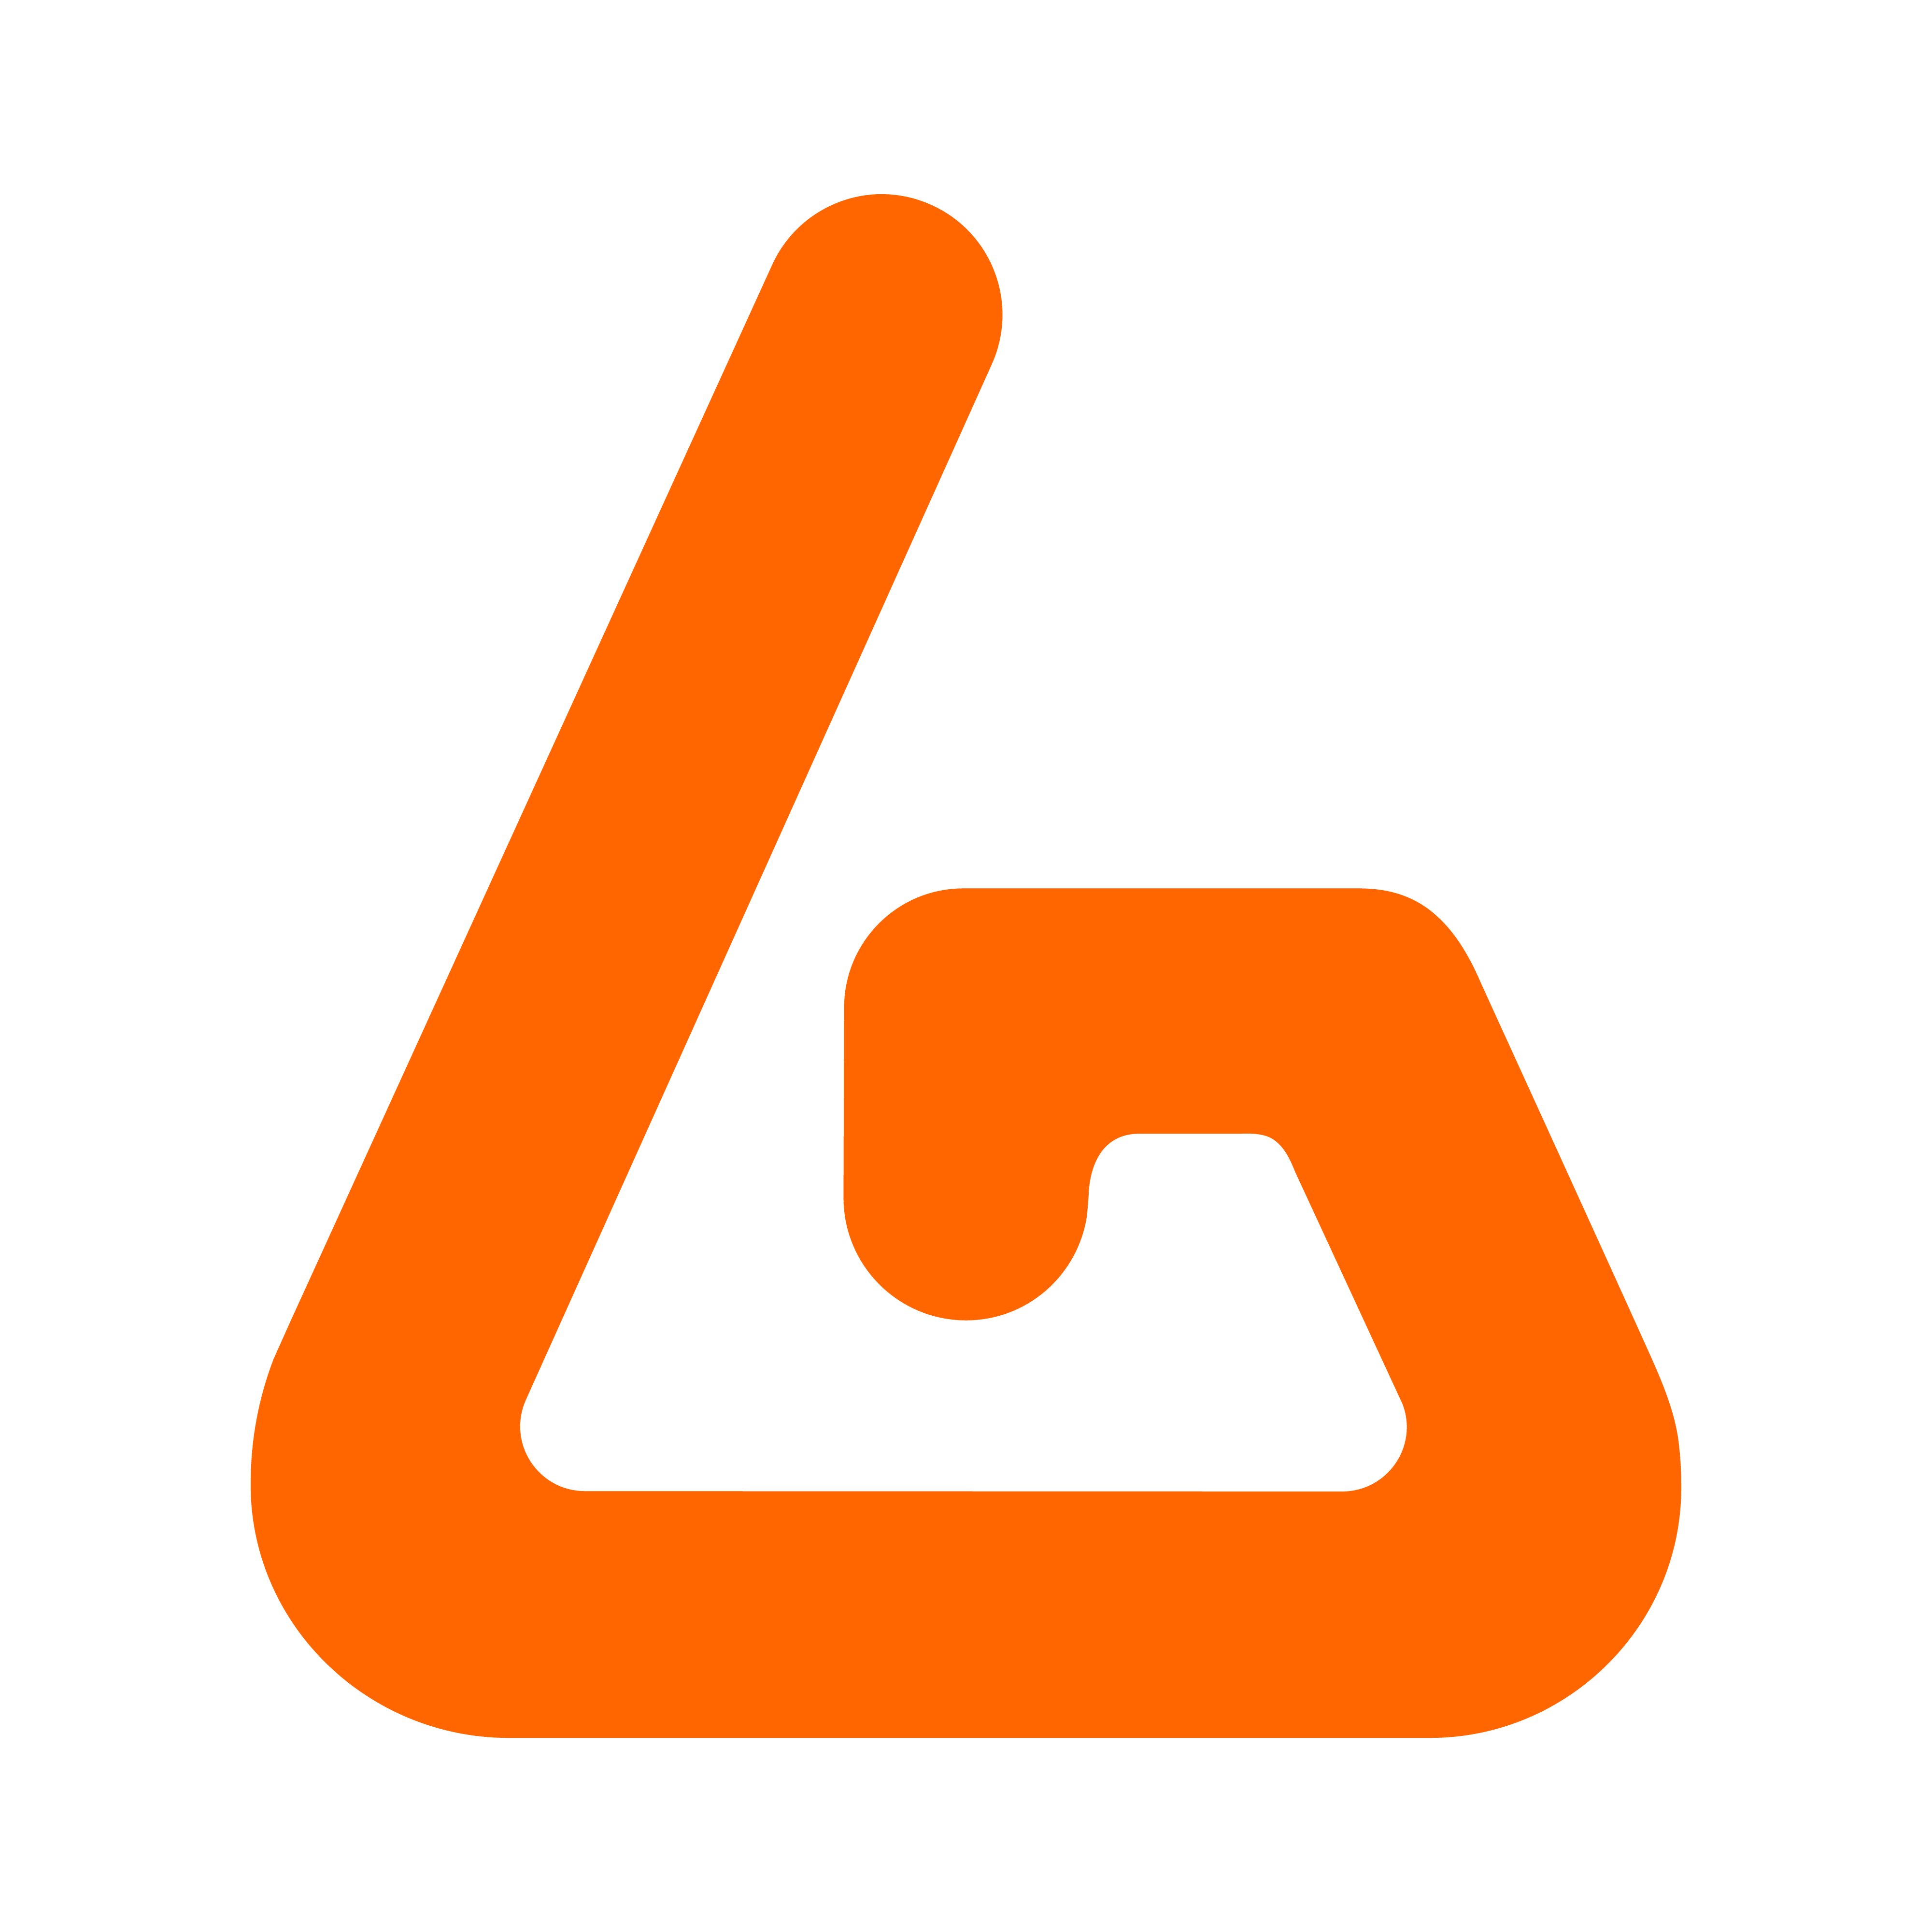 protubevr logo icon on white background